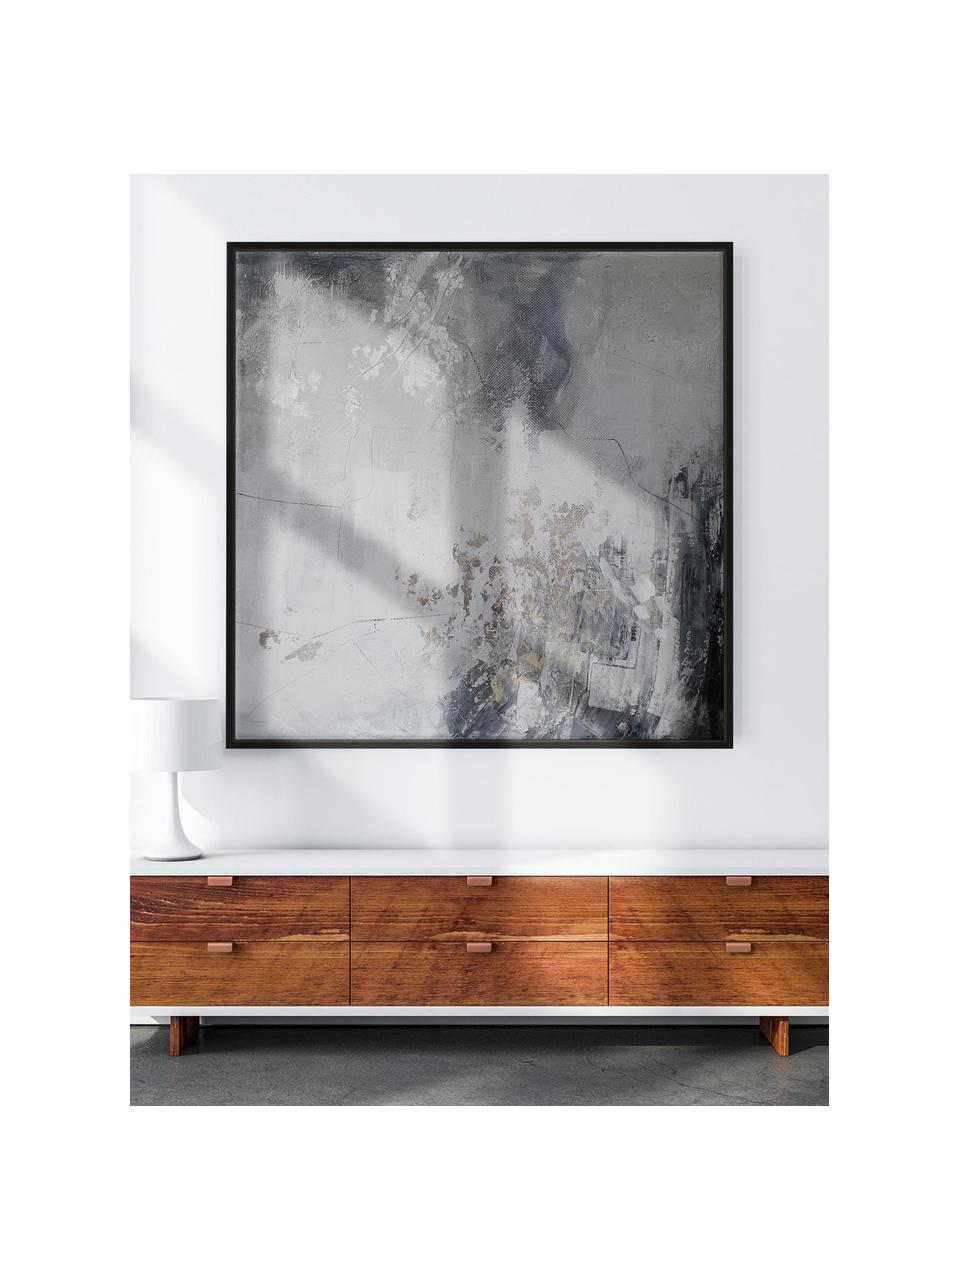 Gerahmtes Leinwandbild Speculation, Bild: Leinwand, Rahmen: Holz, Grautöne, Beige, B 103 x H 103 cm